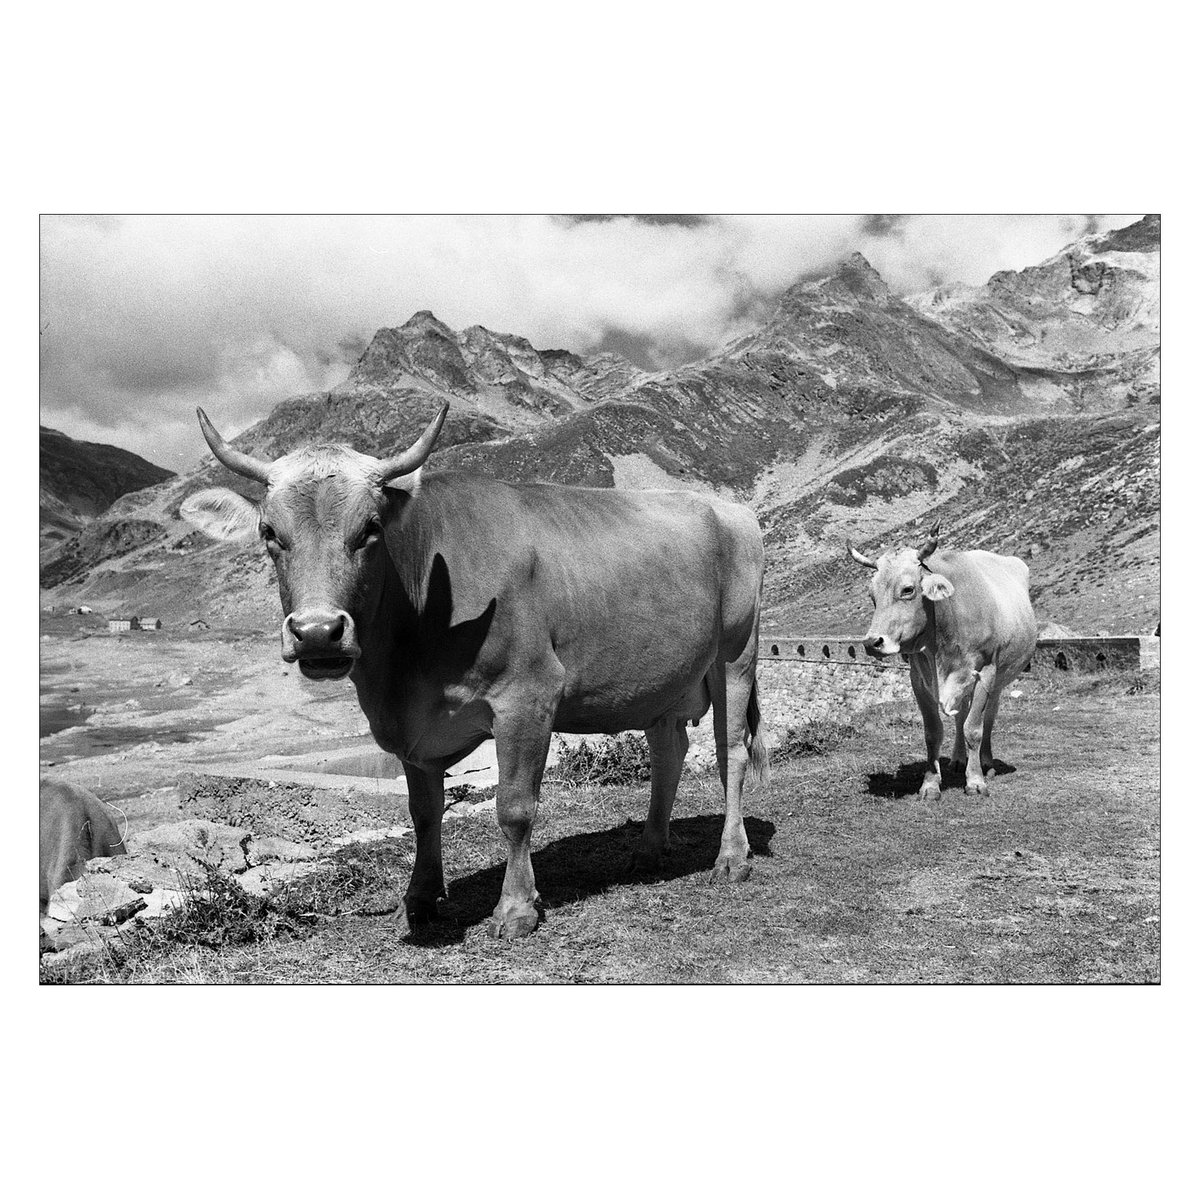 #fotografiaanalogica #filmphotography #mucche #cows #paesaggioitaliano #likesegantini #segantinistyle #bnwfilmphotography #oldphotography  #35mmfilmphotography #italianlandscape #alpiitaliane  #analogphotography #cowphotography